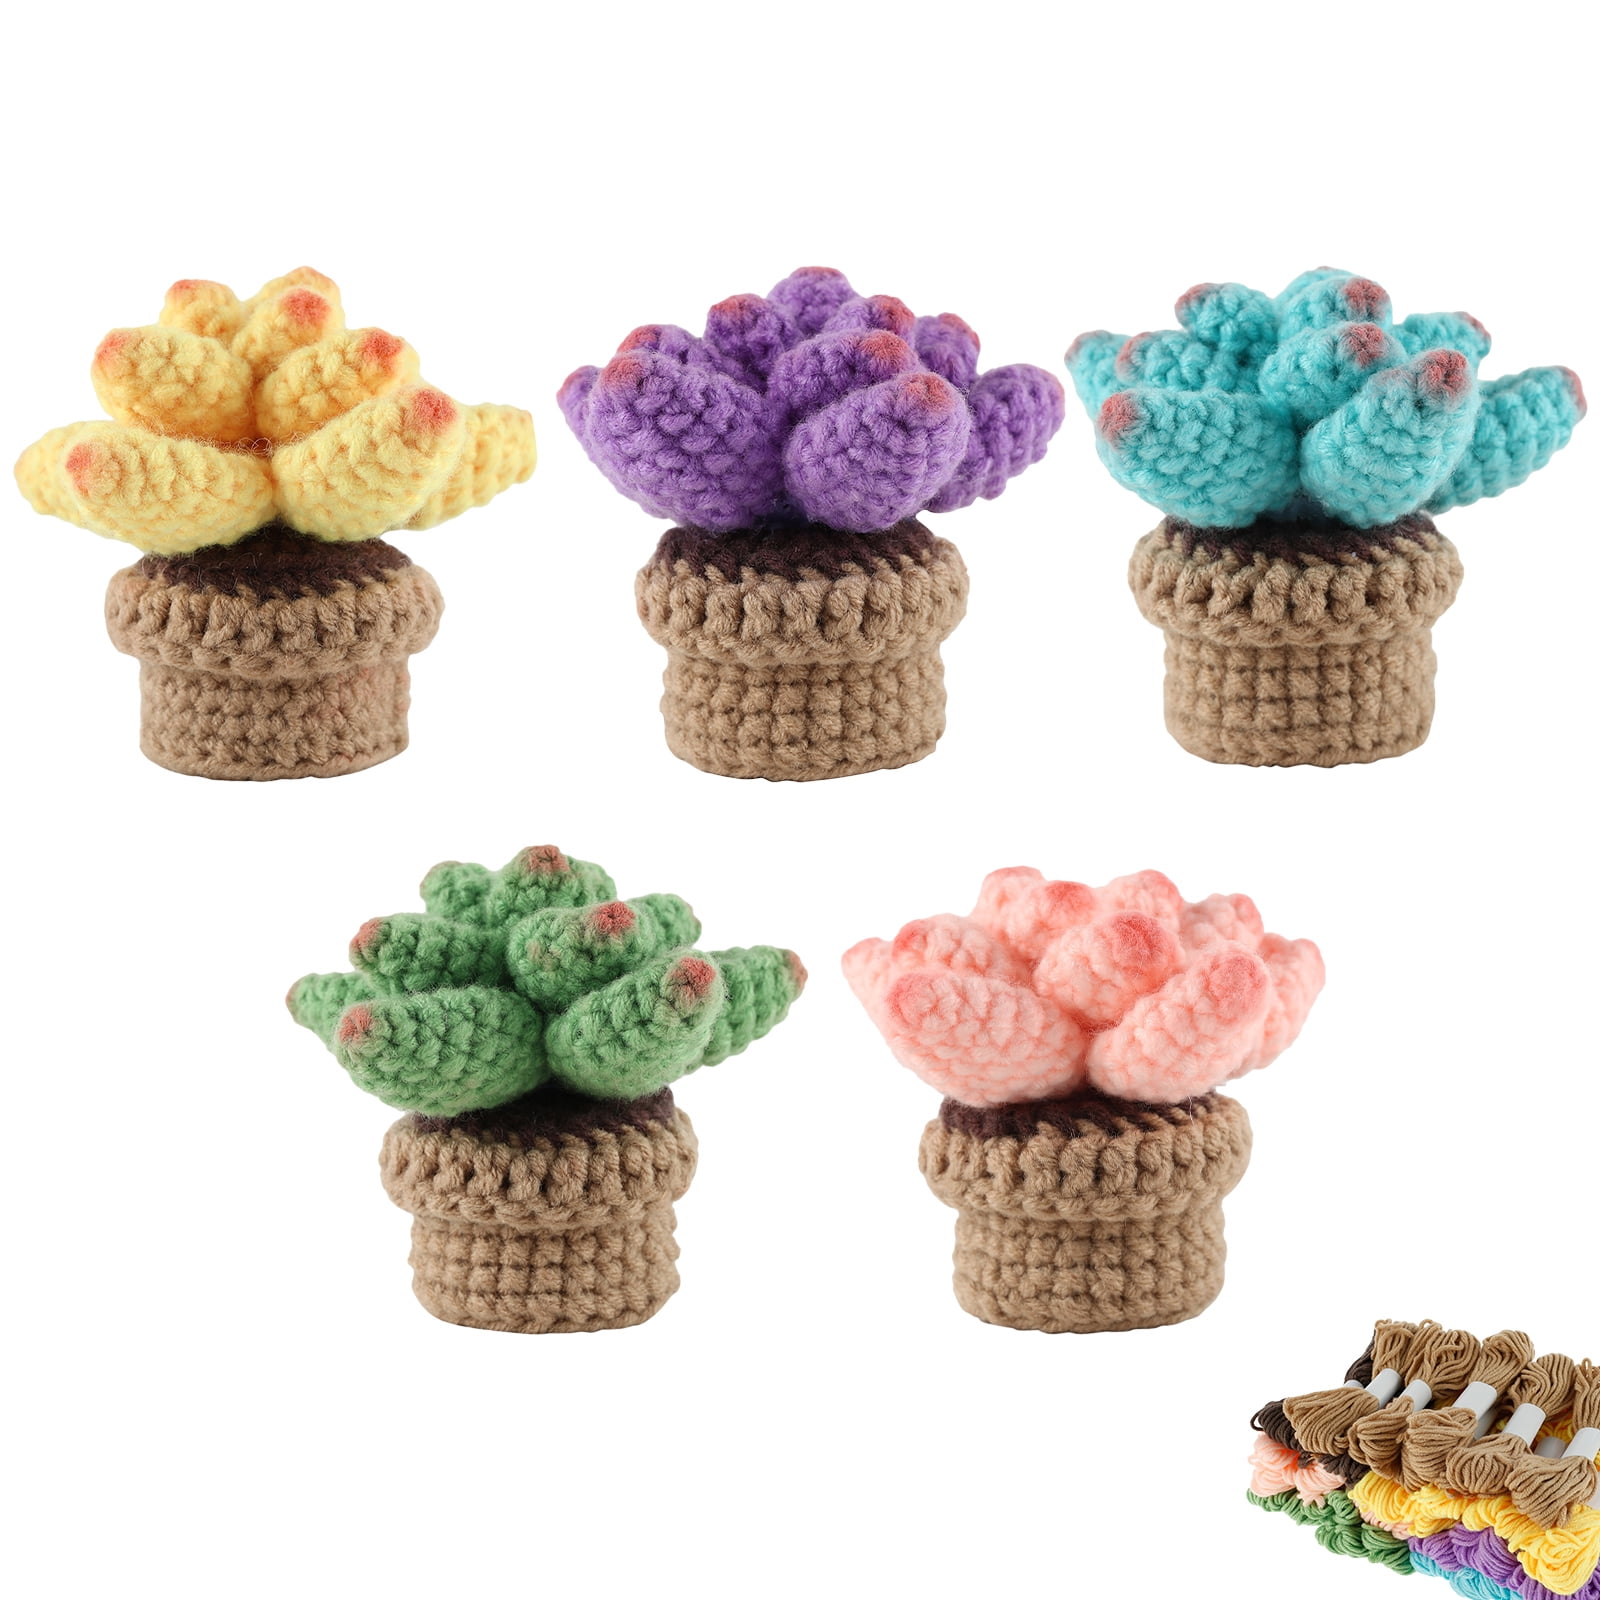 TENGYES Crochet Kit for Beginners - 5pcs Succulents, Beginner Crochet Starter Kits for Complete Beginners Adults and Kids, CR